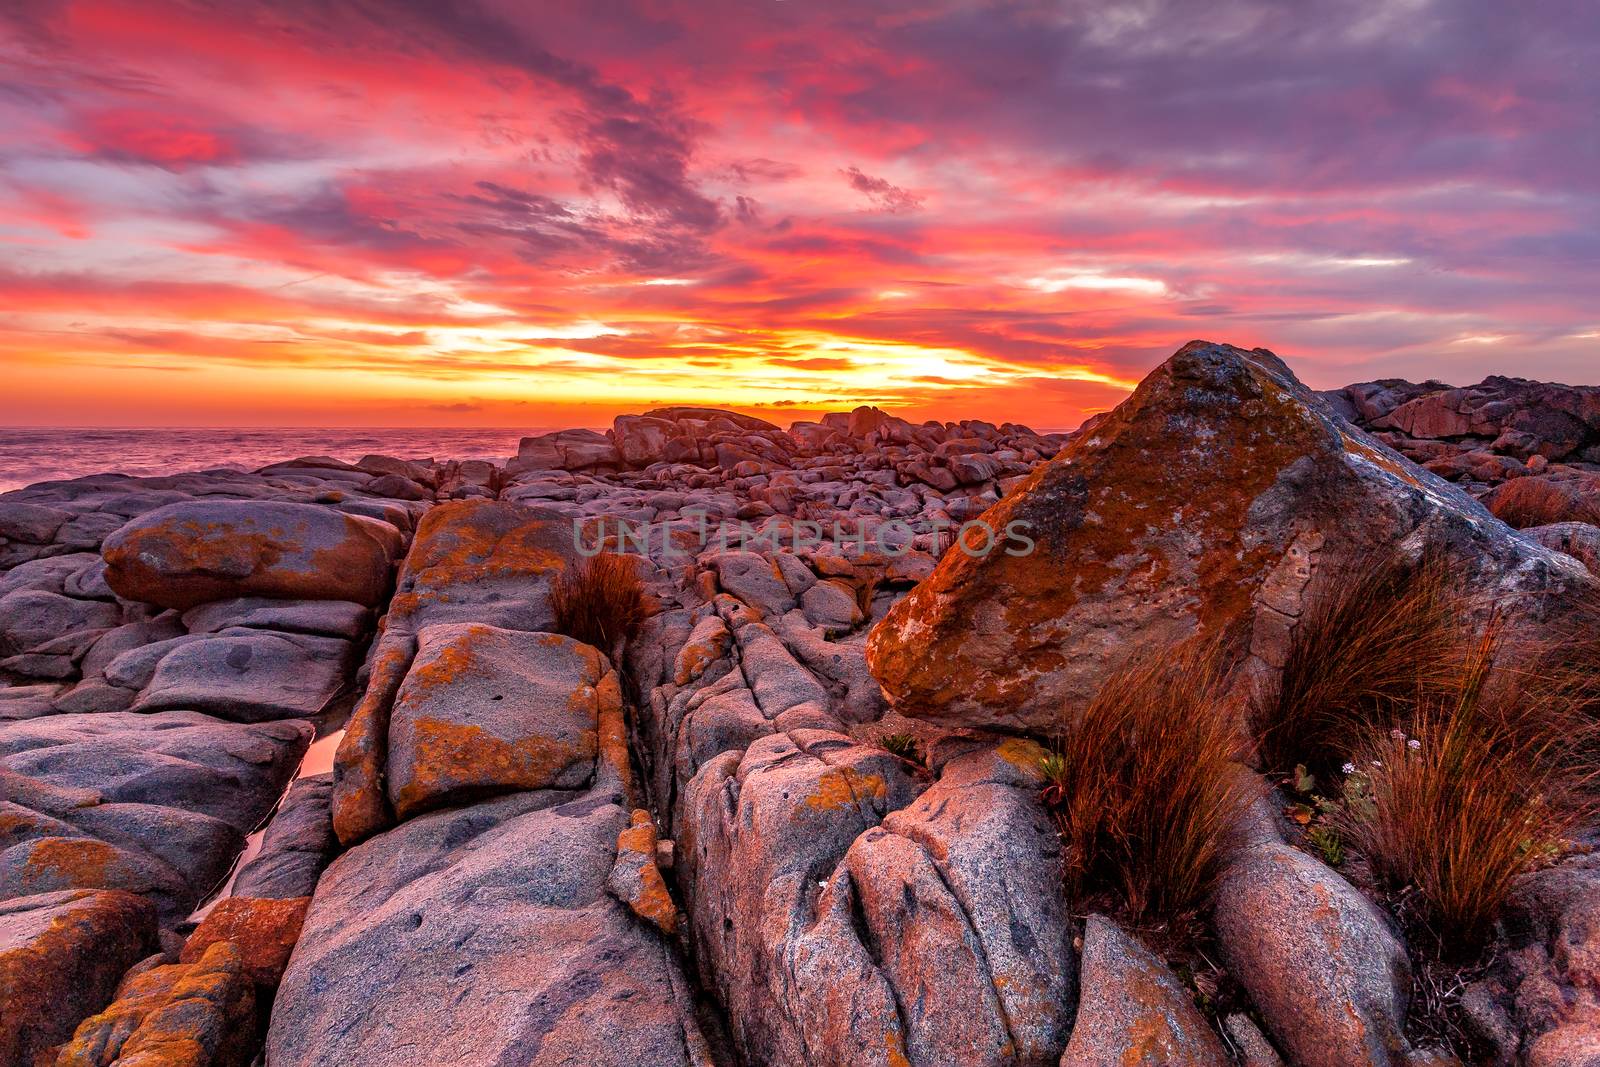 Rich blazing red orange and yellow vivid colour sunrise over the ocean and rocky coastal landscape.  Australia